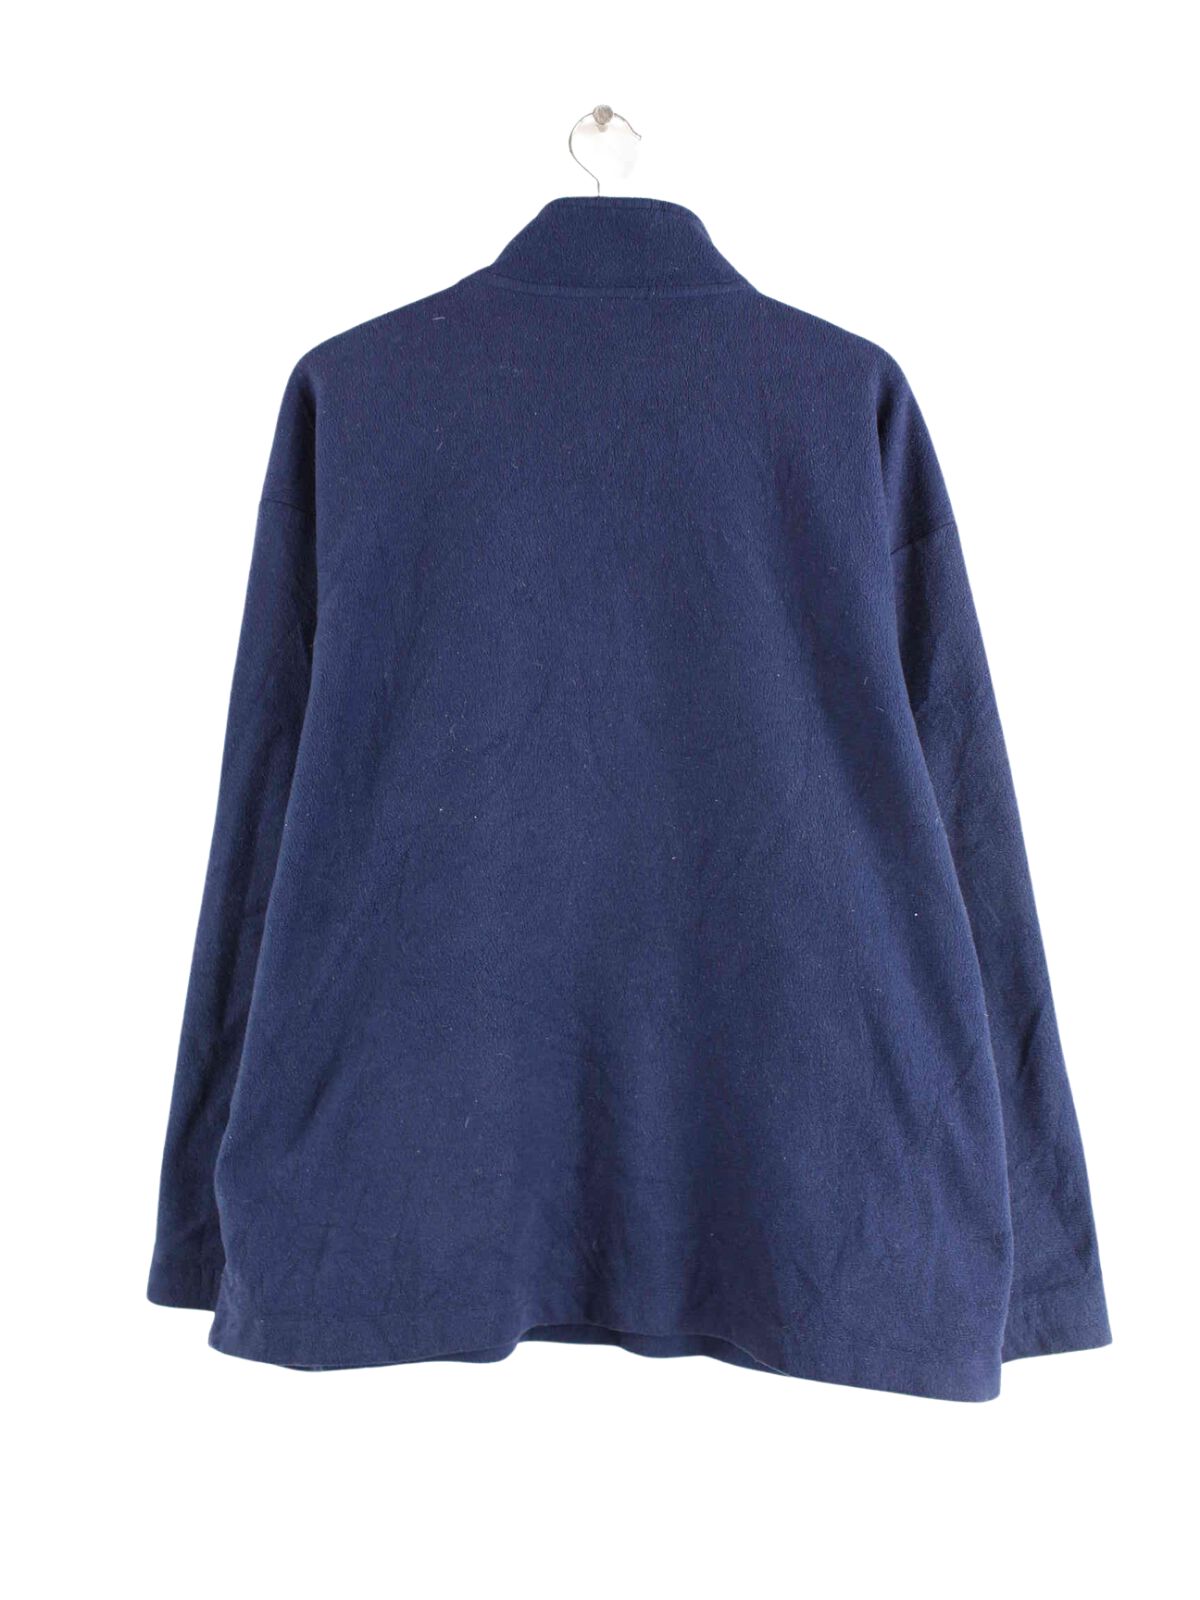 Fay 90s Vintage Embroidered Fleece Half Zip Sweater Blau L (back image)